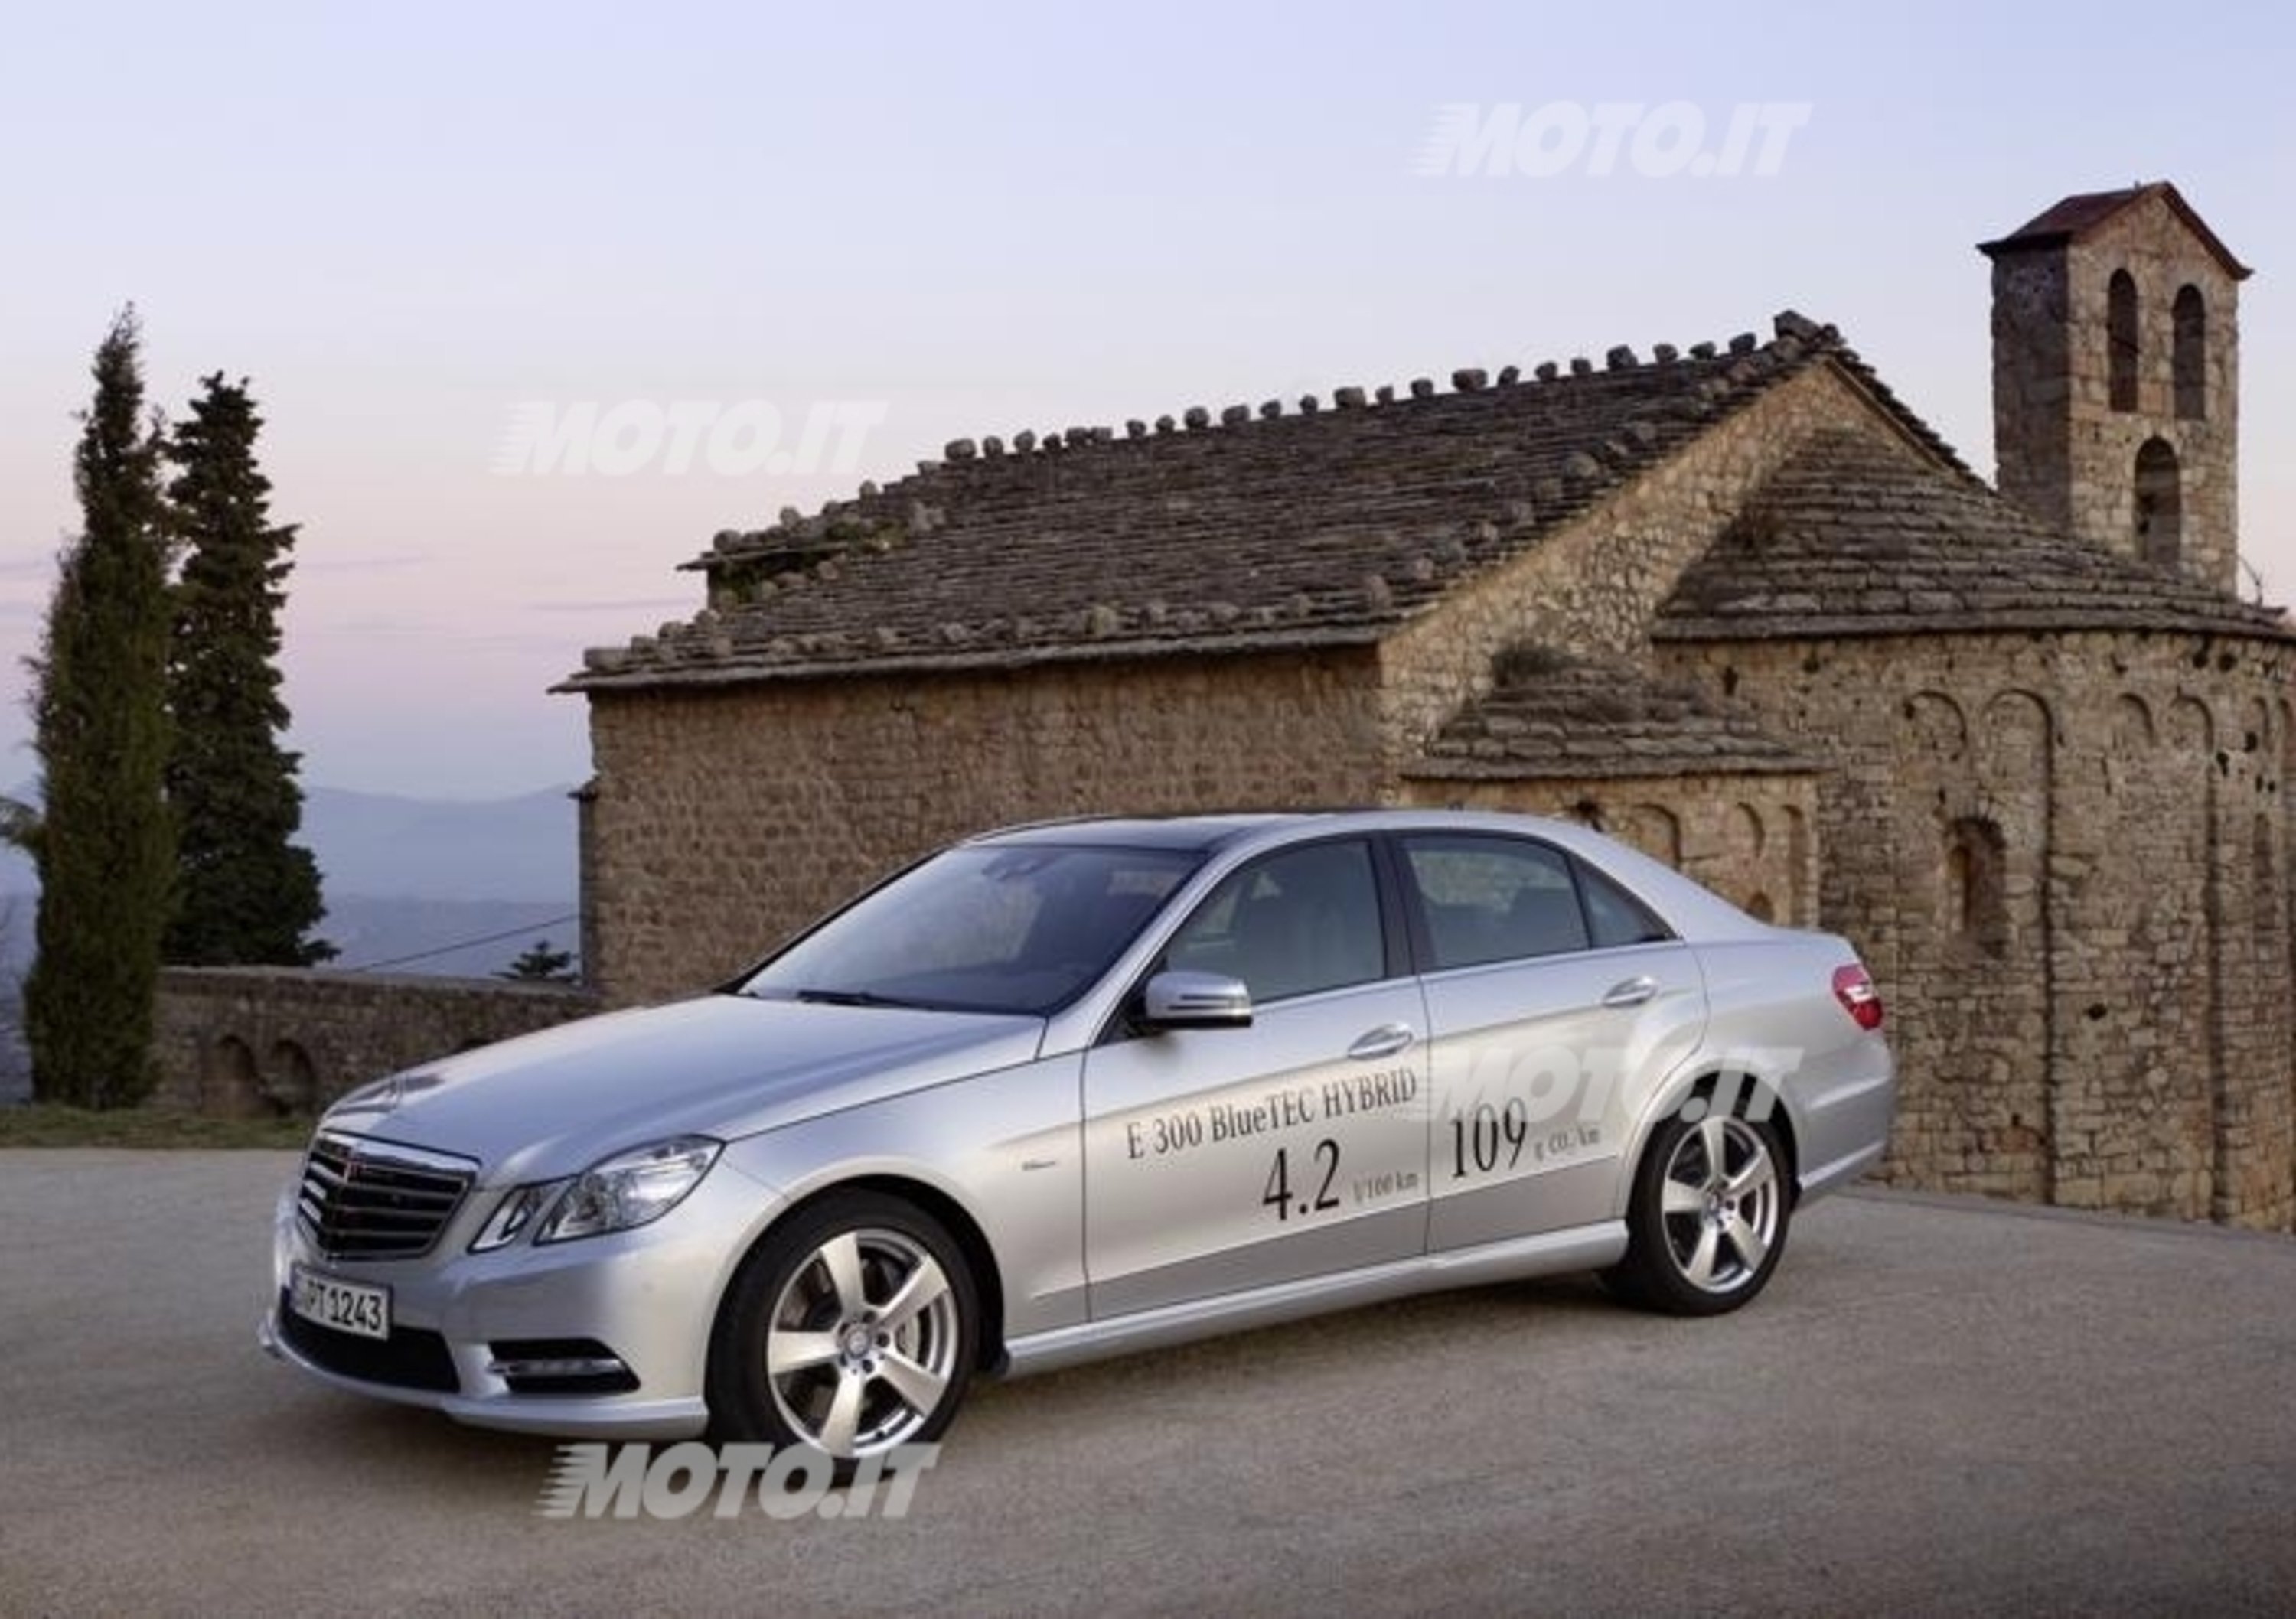 Mercedes-Benz Classe E BlueTEC HYBRID: ottiene la classe energetica A+